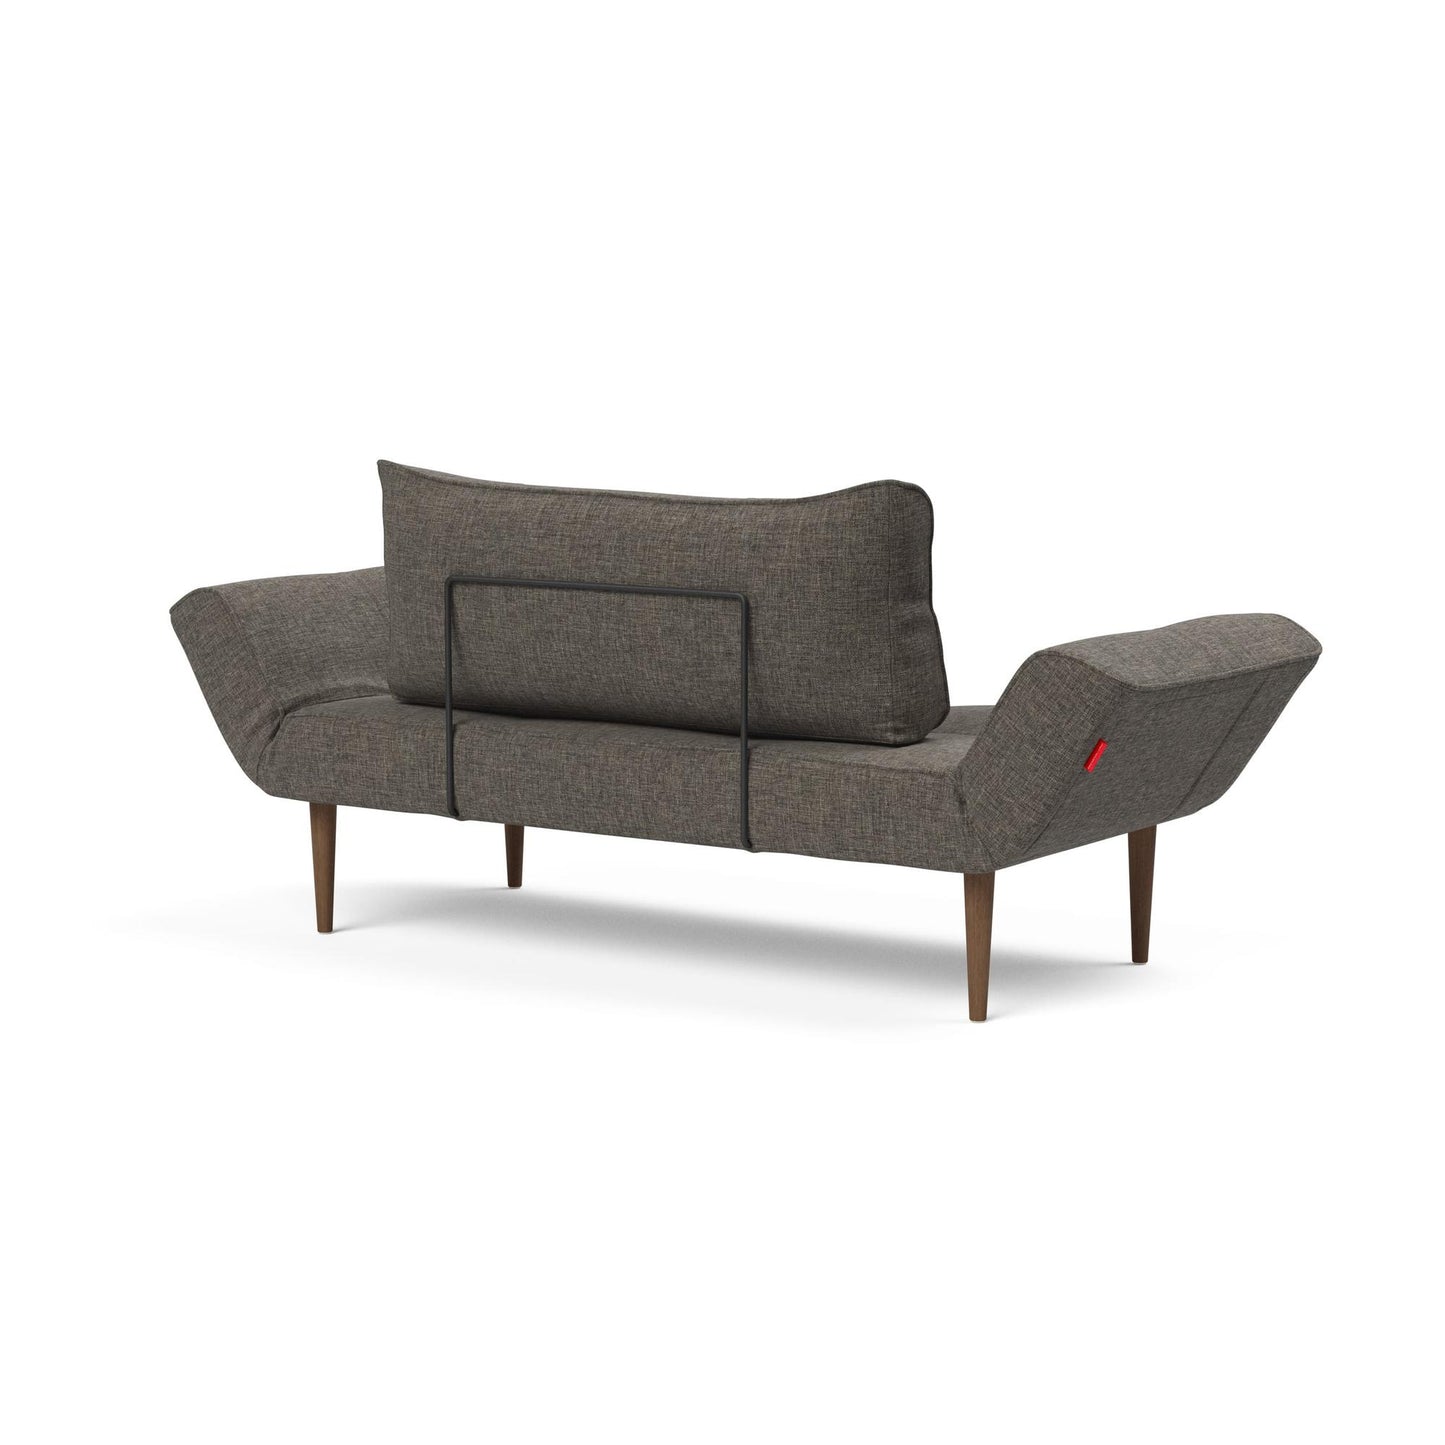 Zeal Deluxe Daybed Sofa Bed in Flashtex Dark Gray